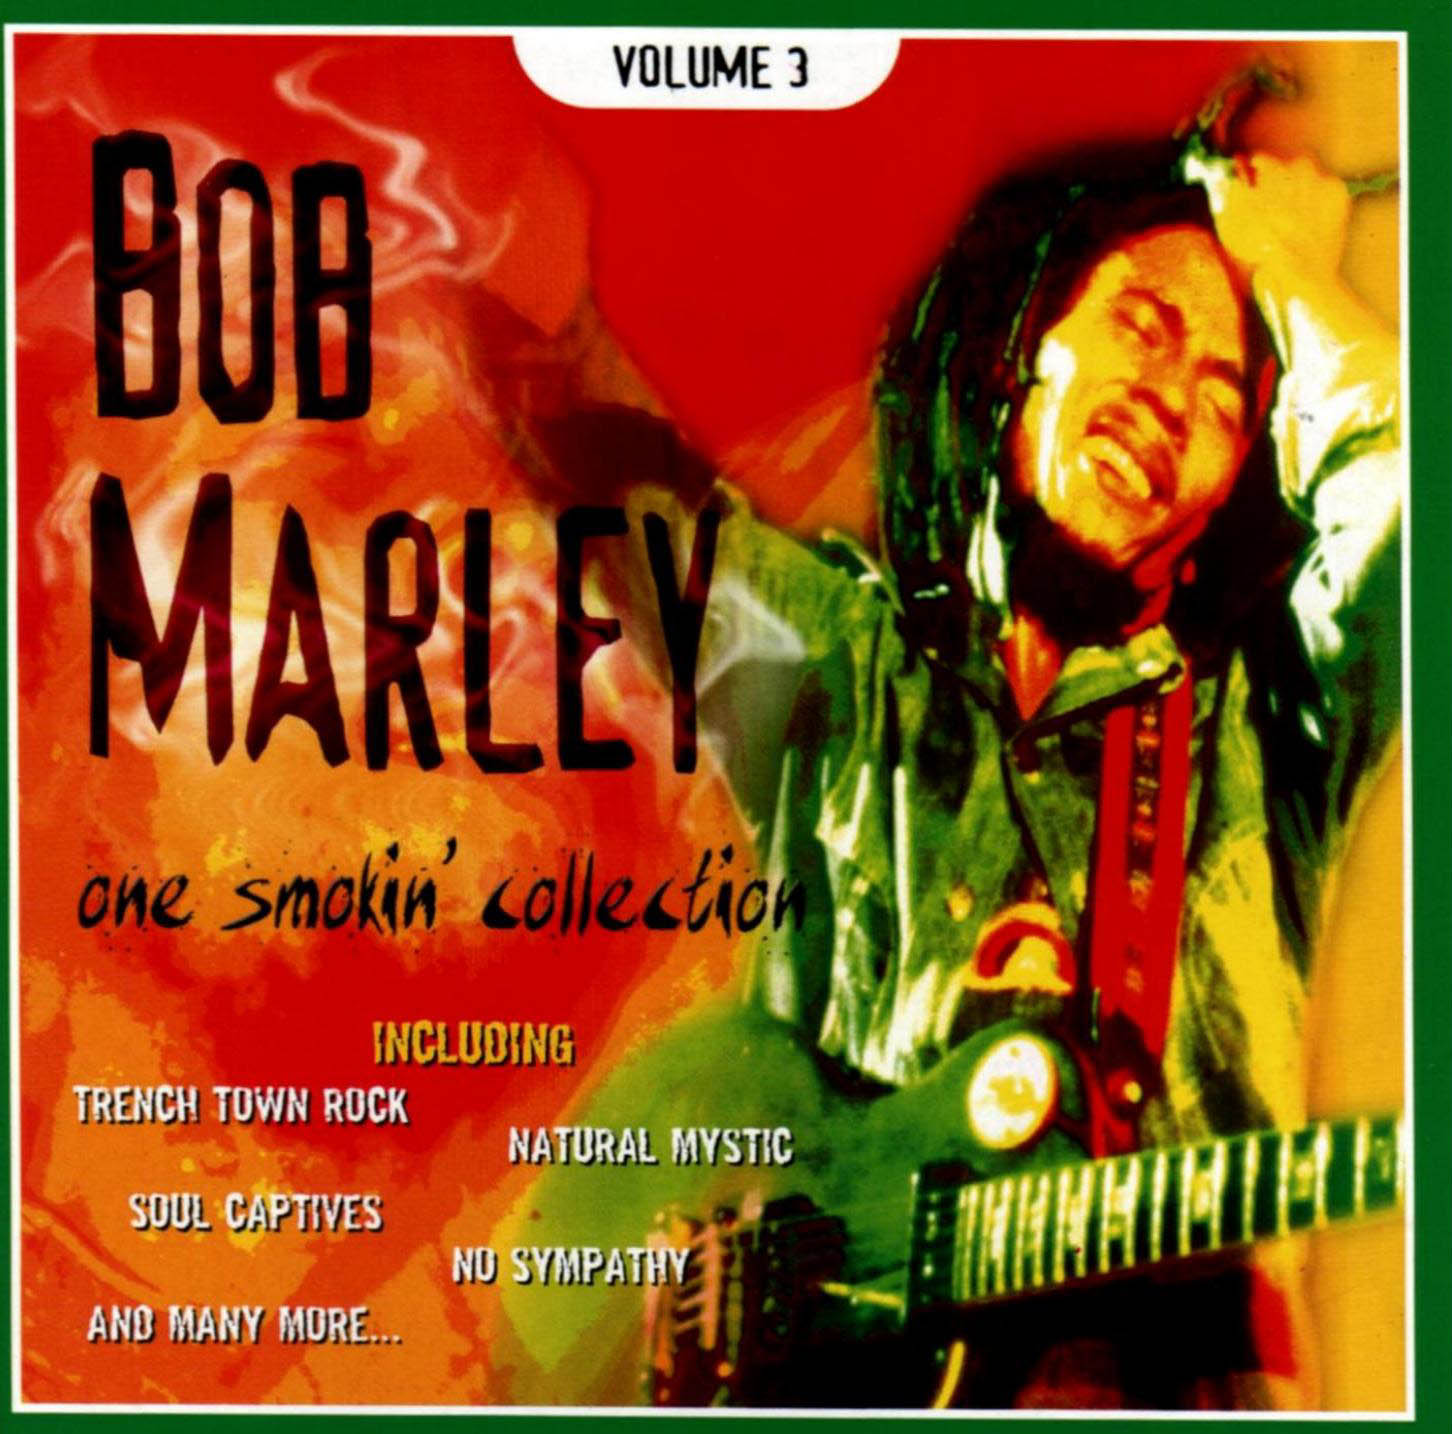 Cartula Frontal de Bob Marley & The Wailers - One Smokin' Collection Volume 3